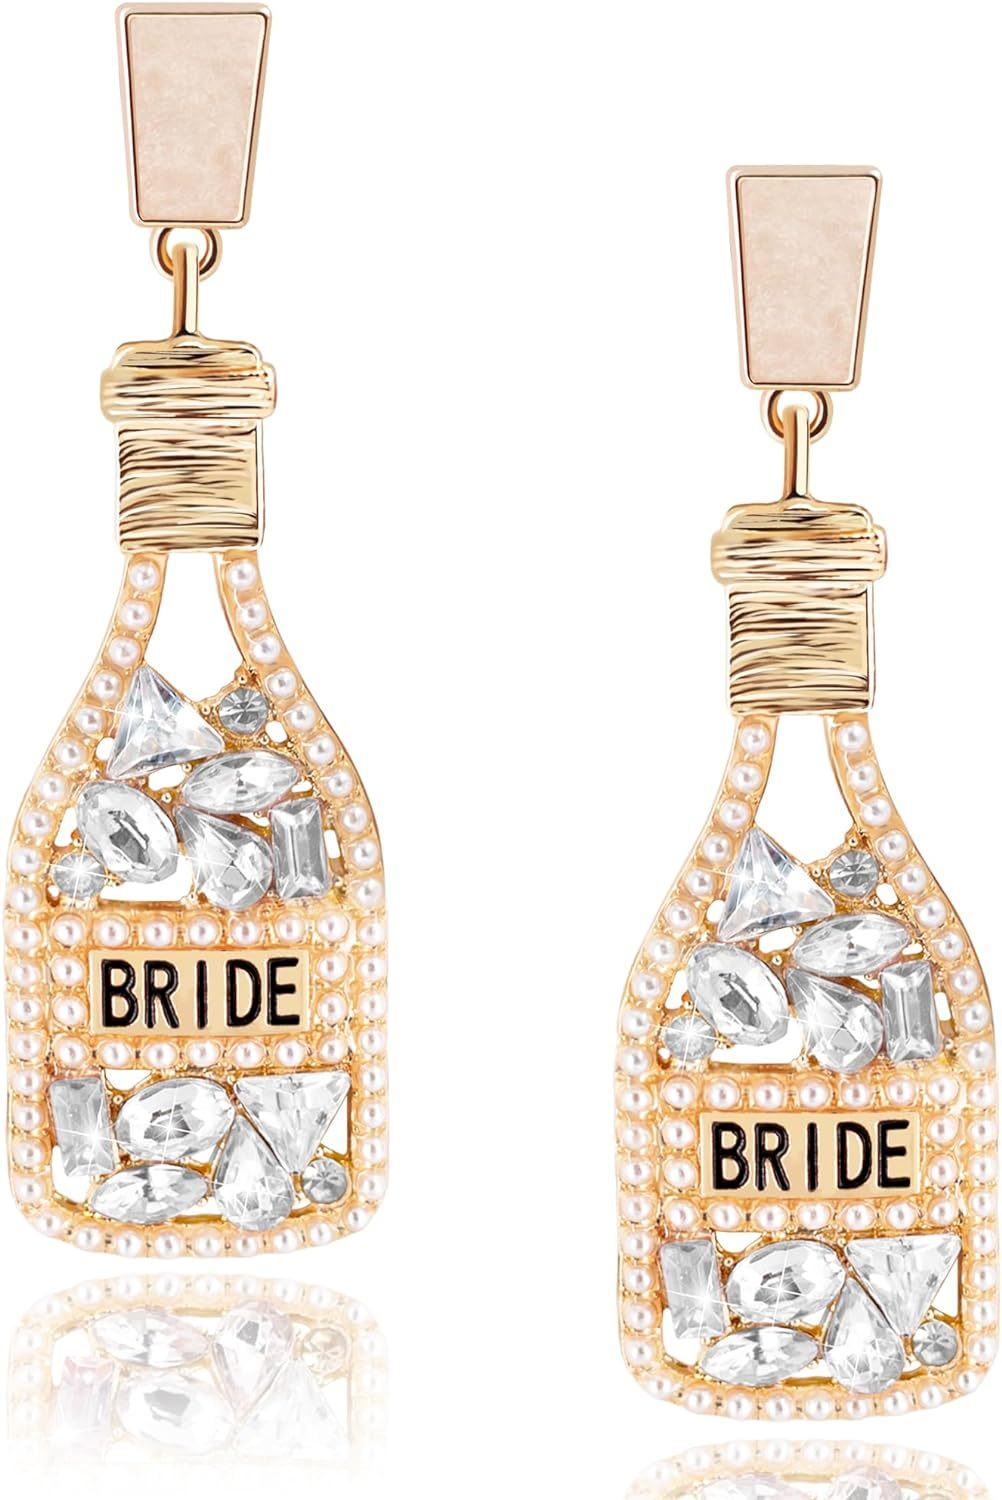 Bachelorette Earrings for Bride - $25.36